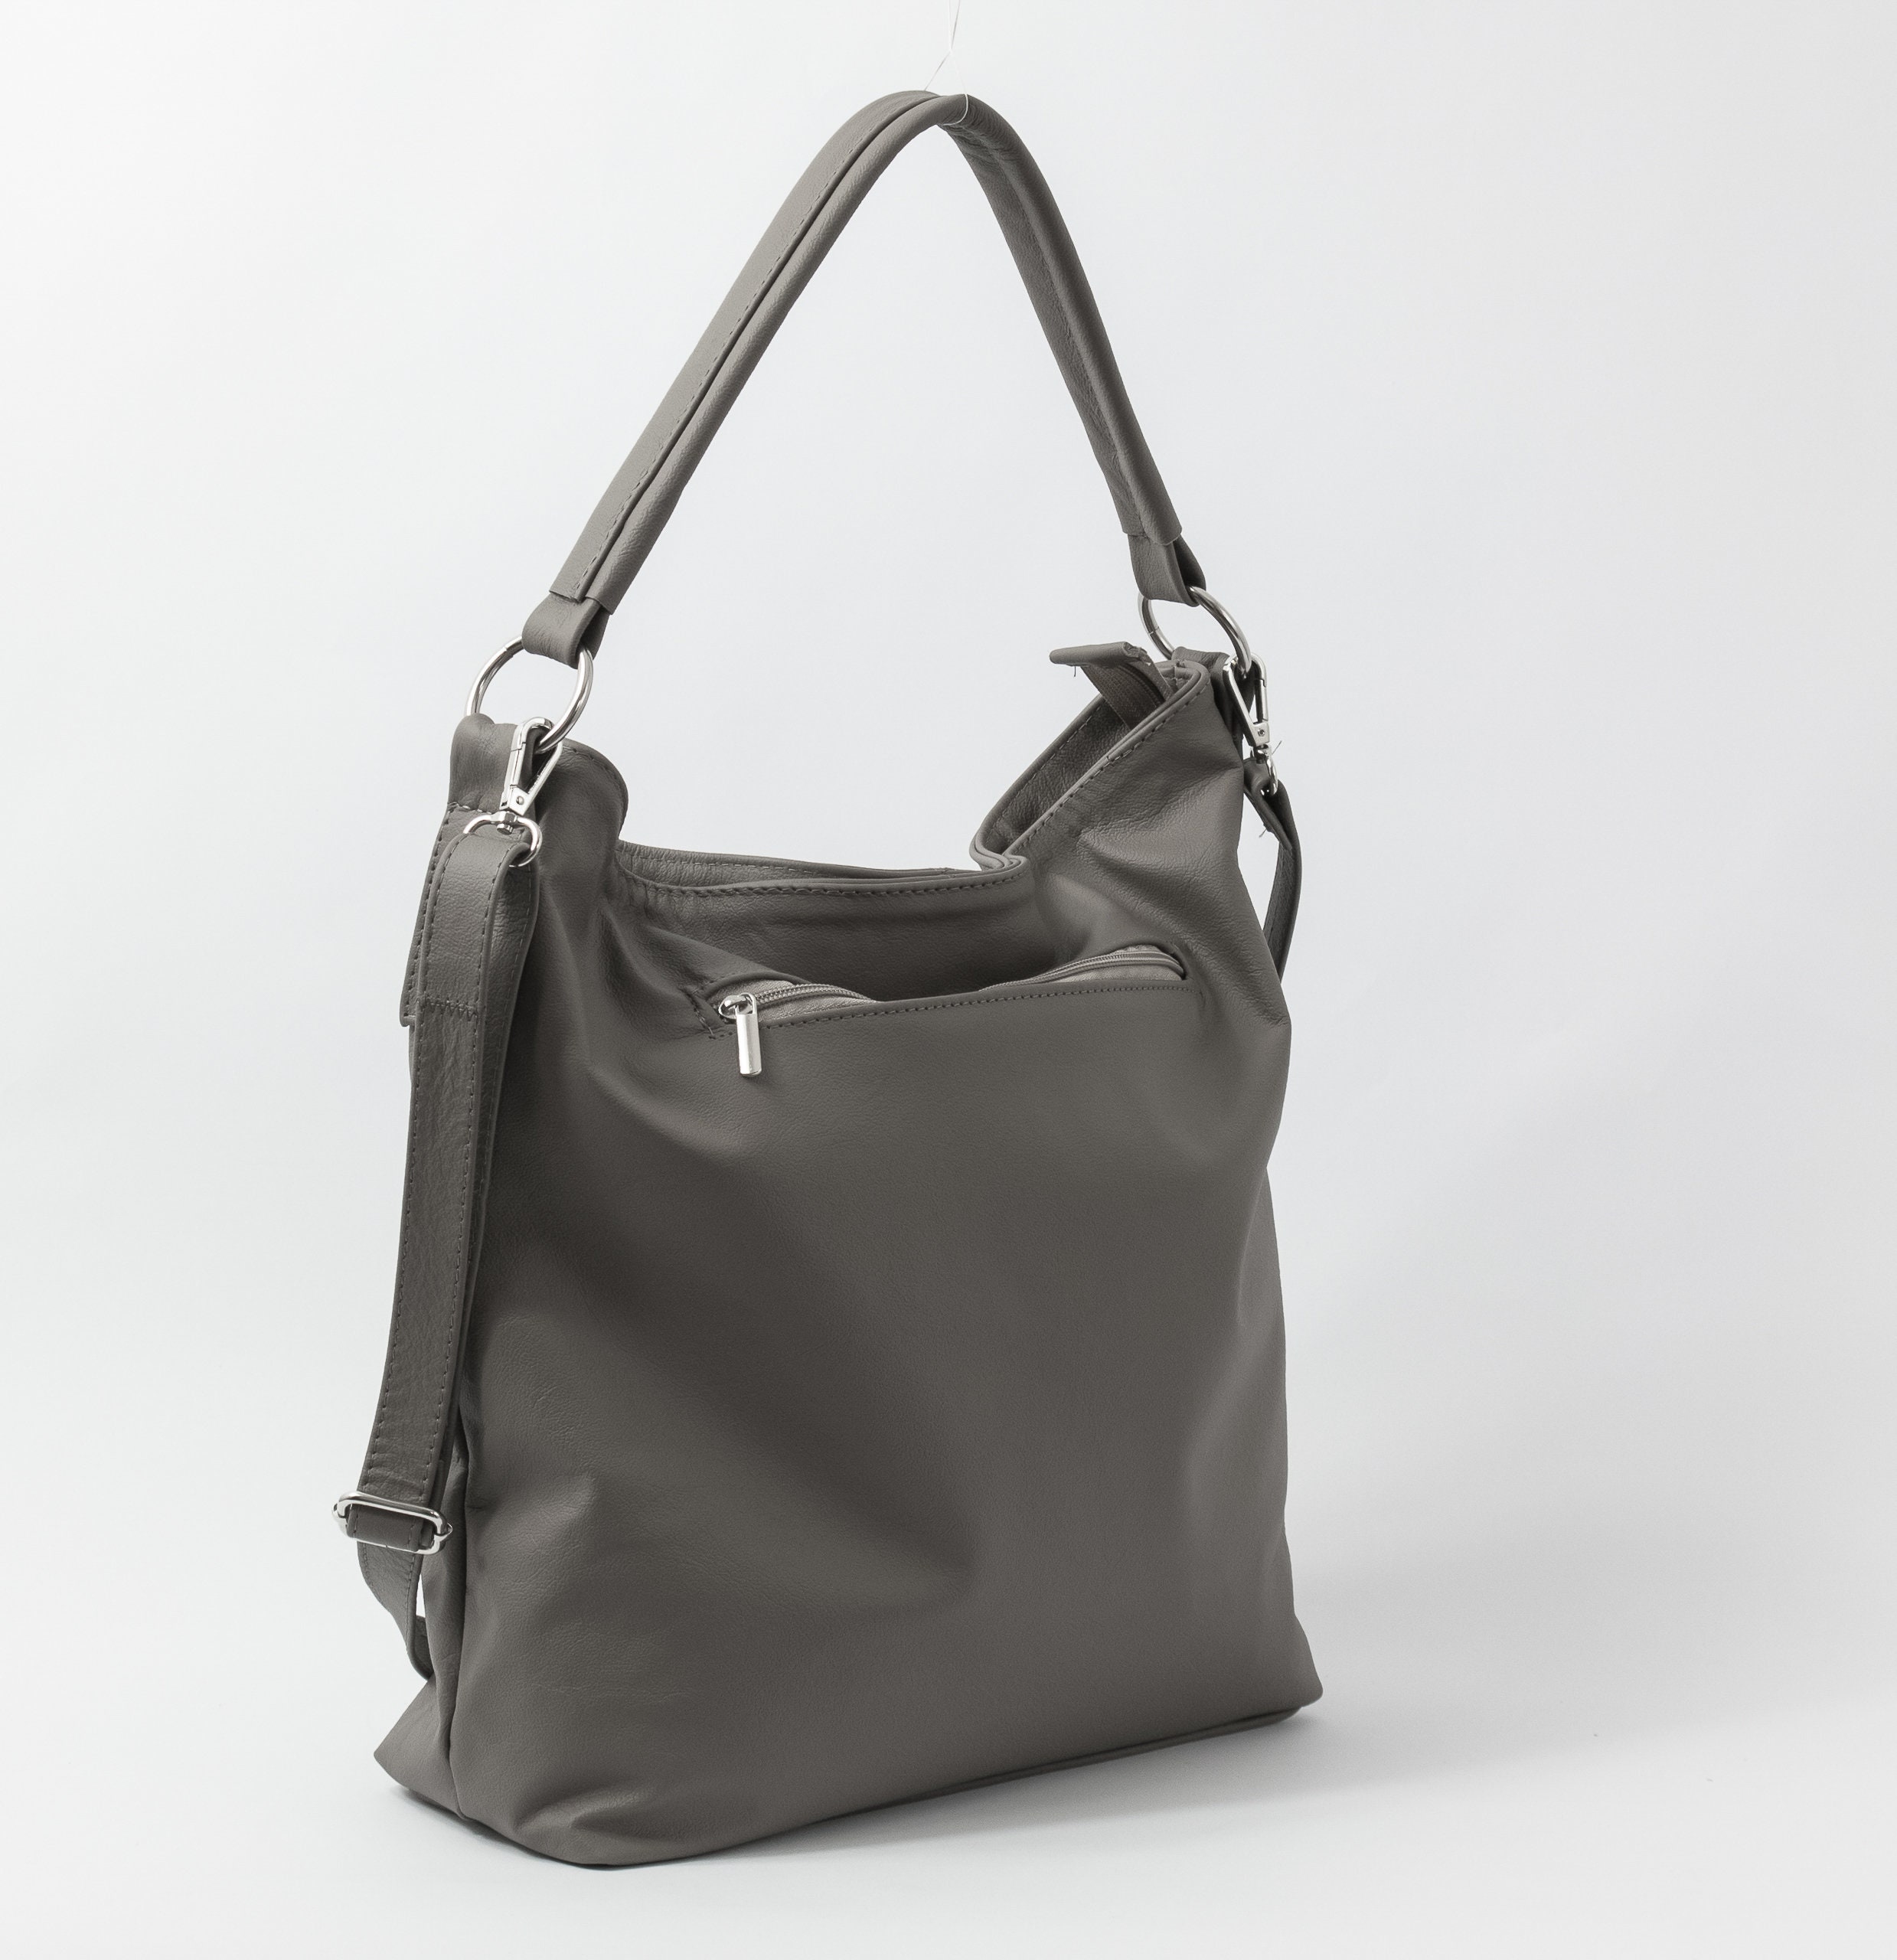 LEATHER HOBO BAG Light Gray Leather Handbag Crossbody Bag | Etsy